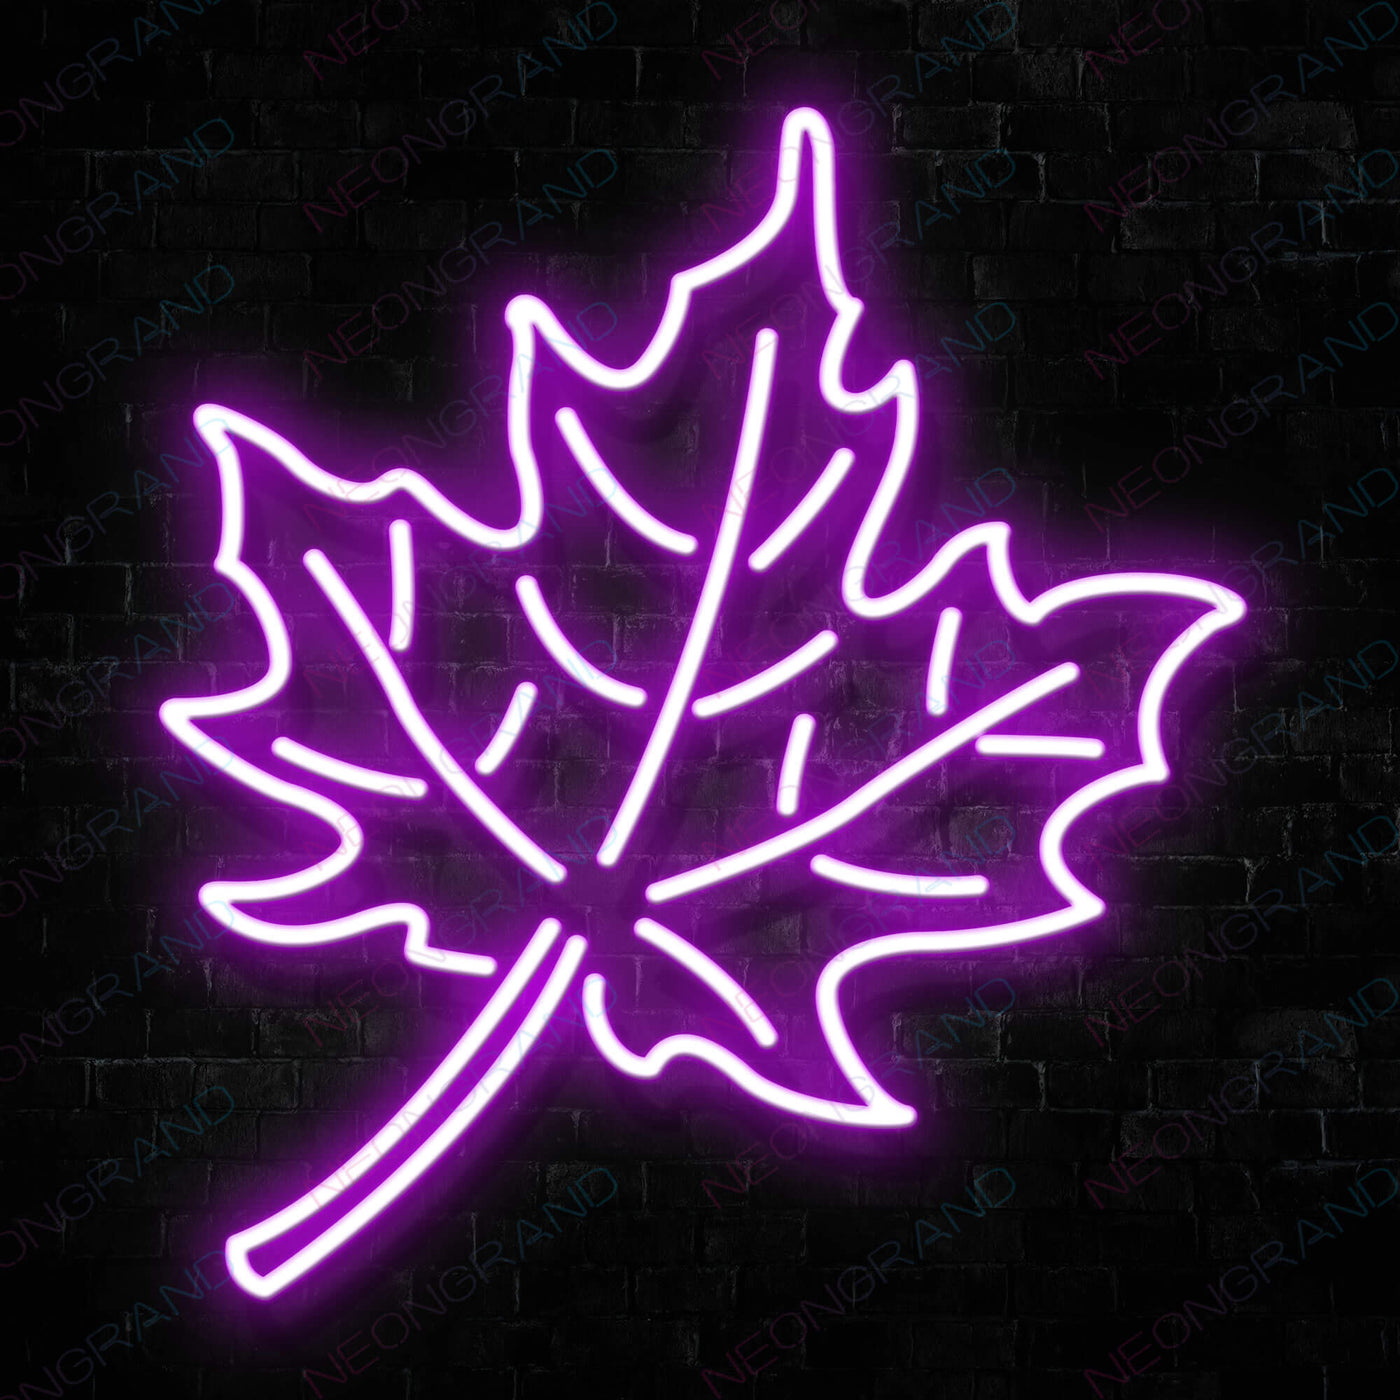 Aesthetic Neon Leaves Sign Led Light purple